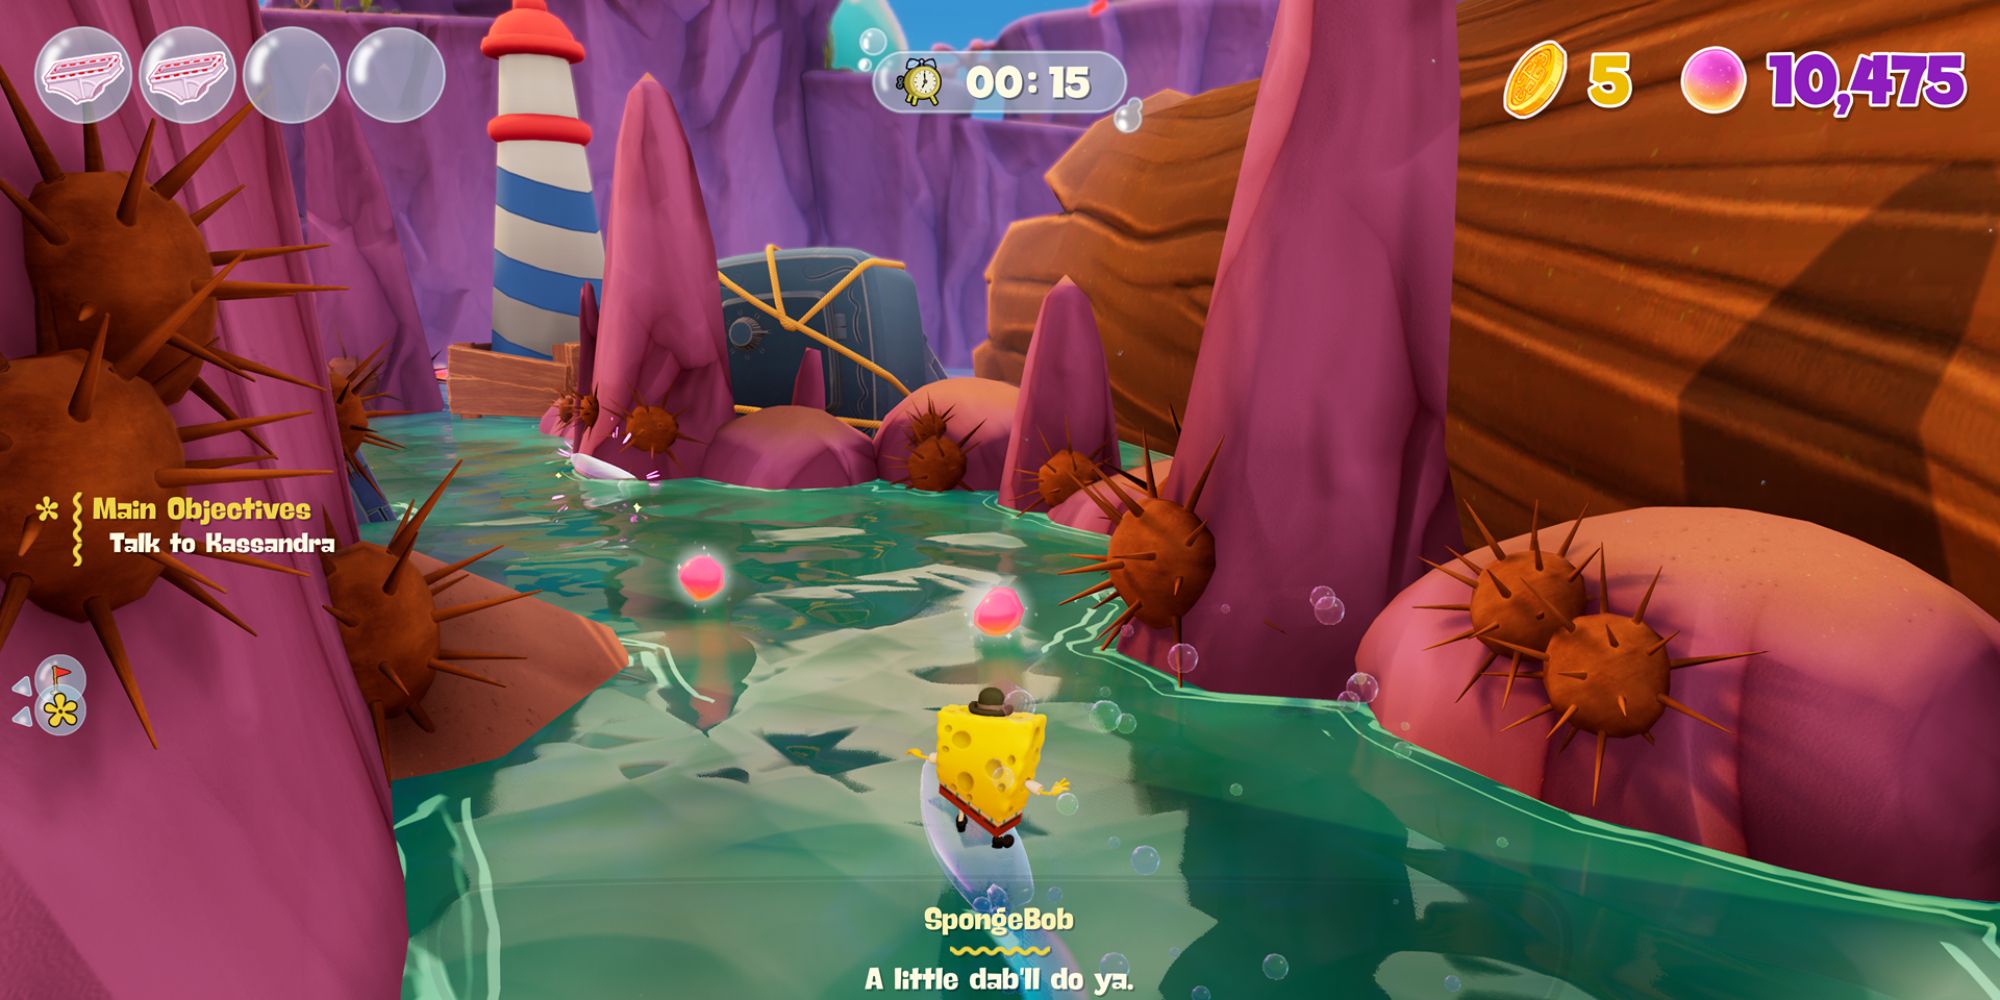 SpongeBob Cosmic Shake Screenshot Of SpongeBob Riding On Hoverboard Over Water